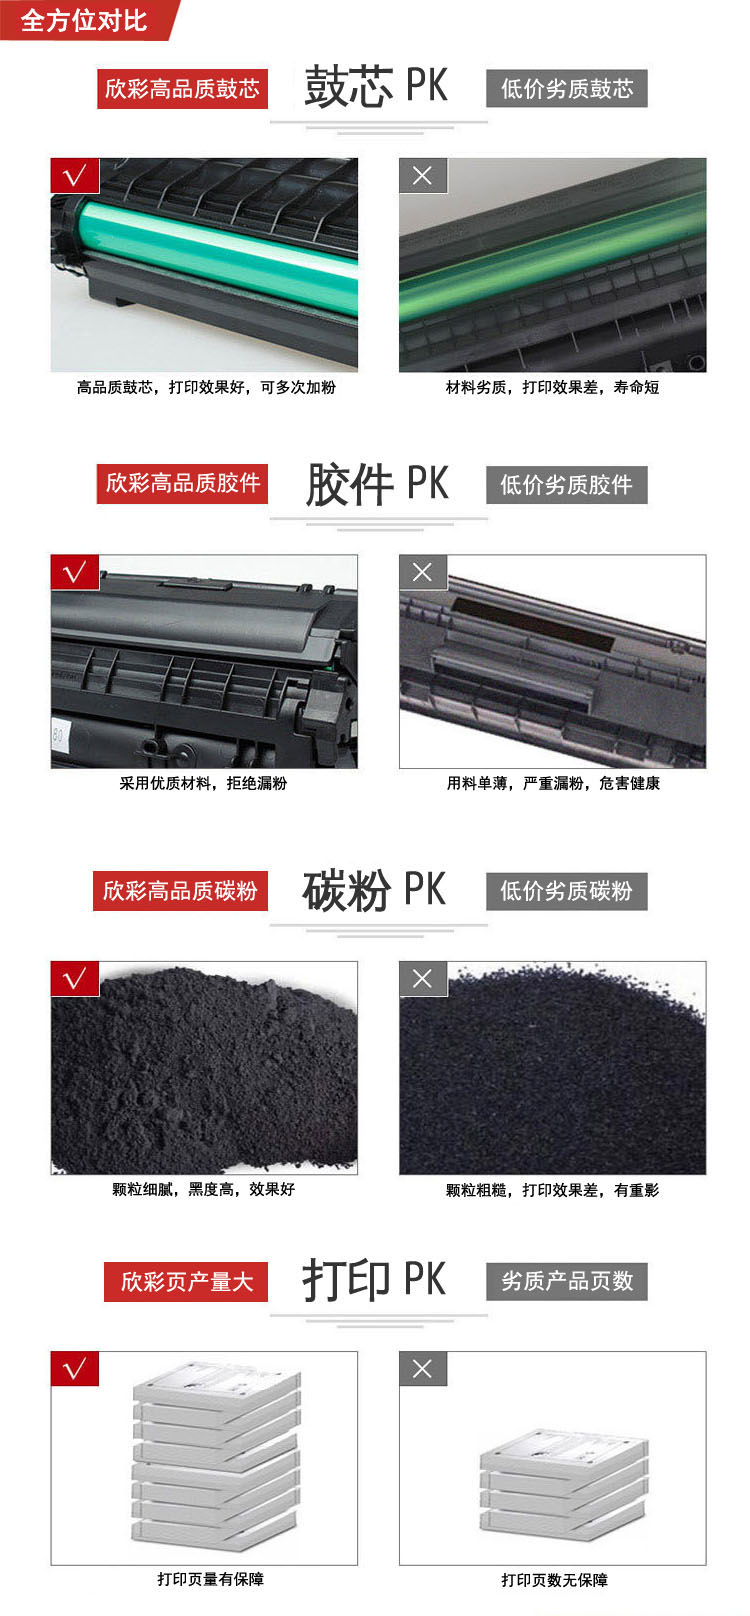 Anycolor欣彩AR-4700K（黑色）彩色硒鼓/墨粉盒适用惠普Q5950A（643A），HP 4700N 黑色